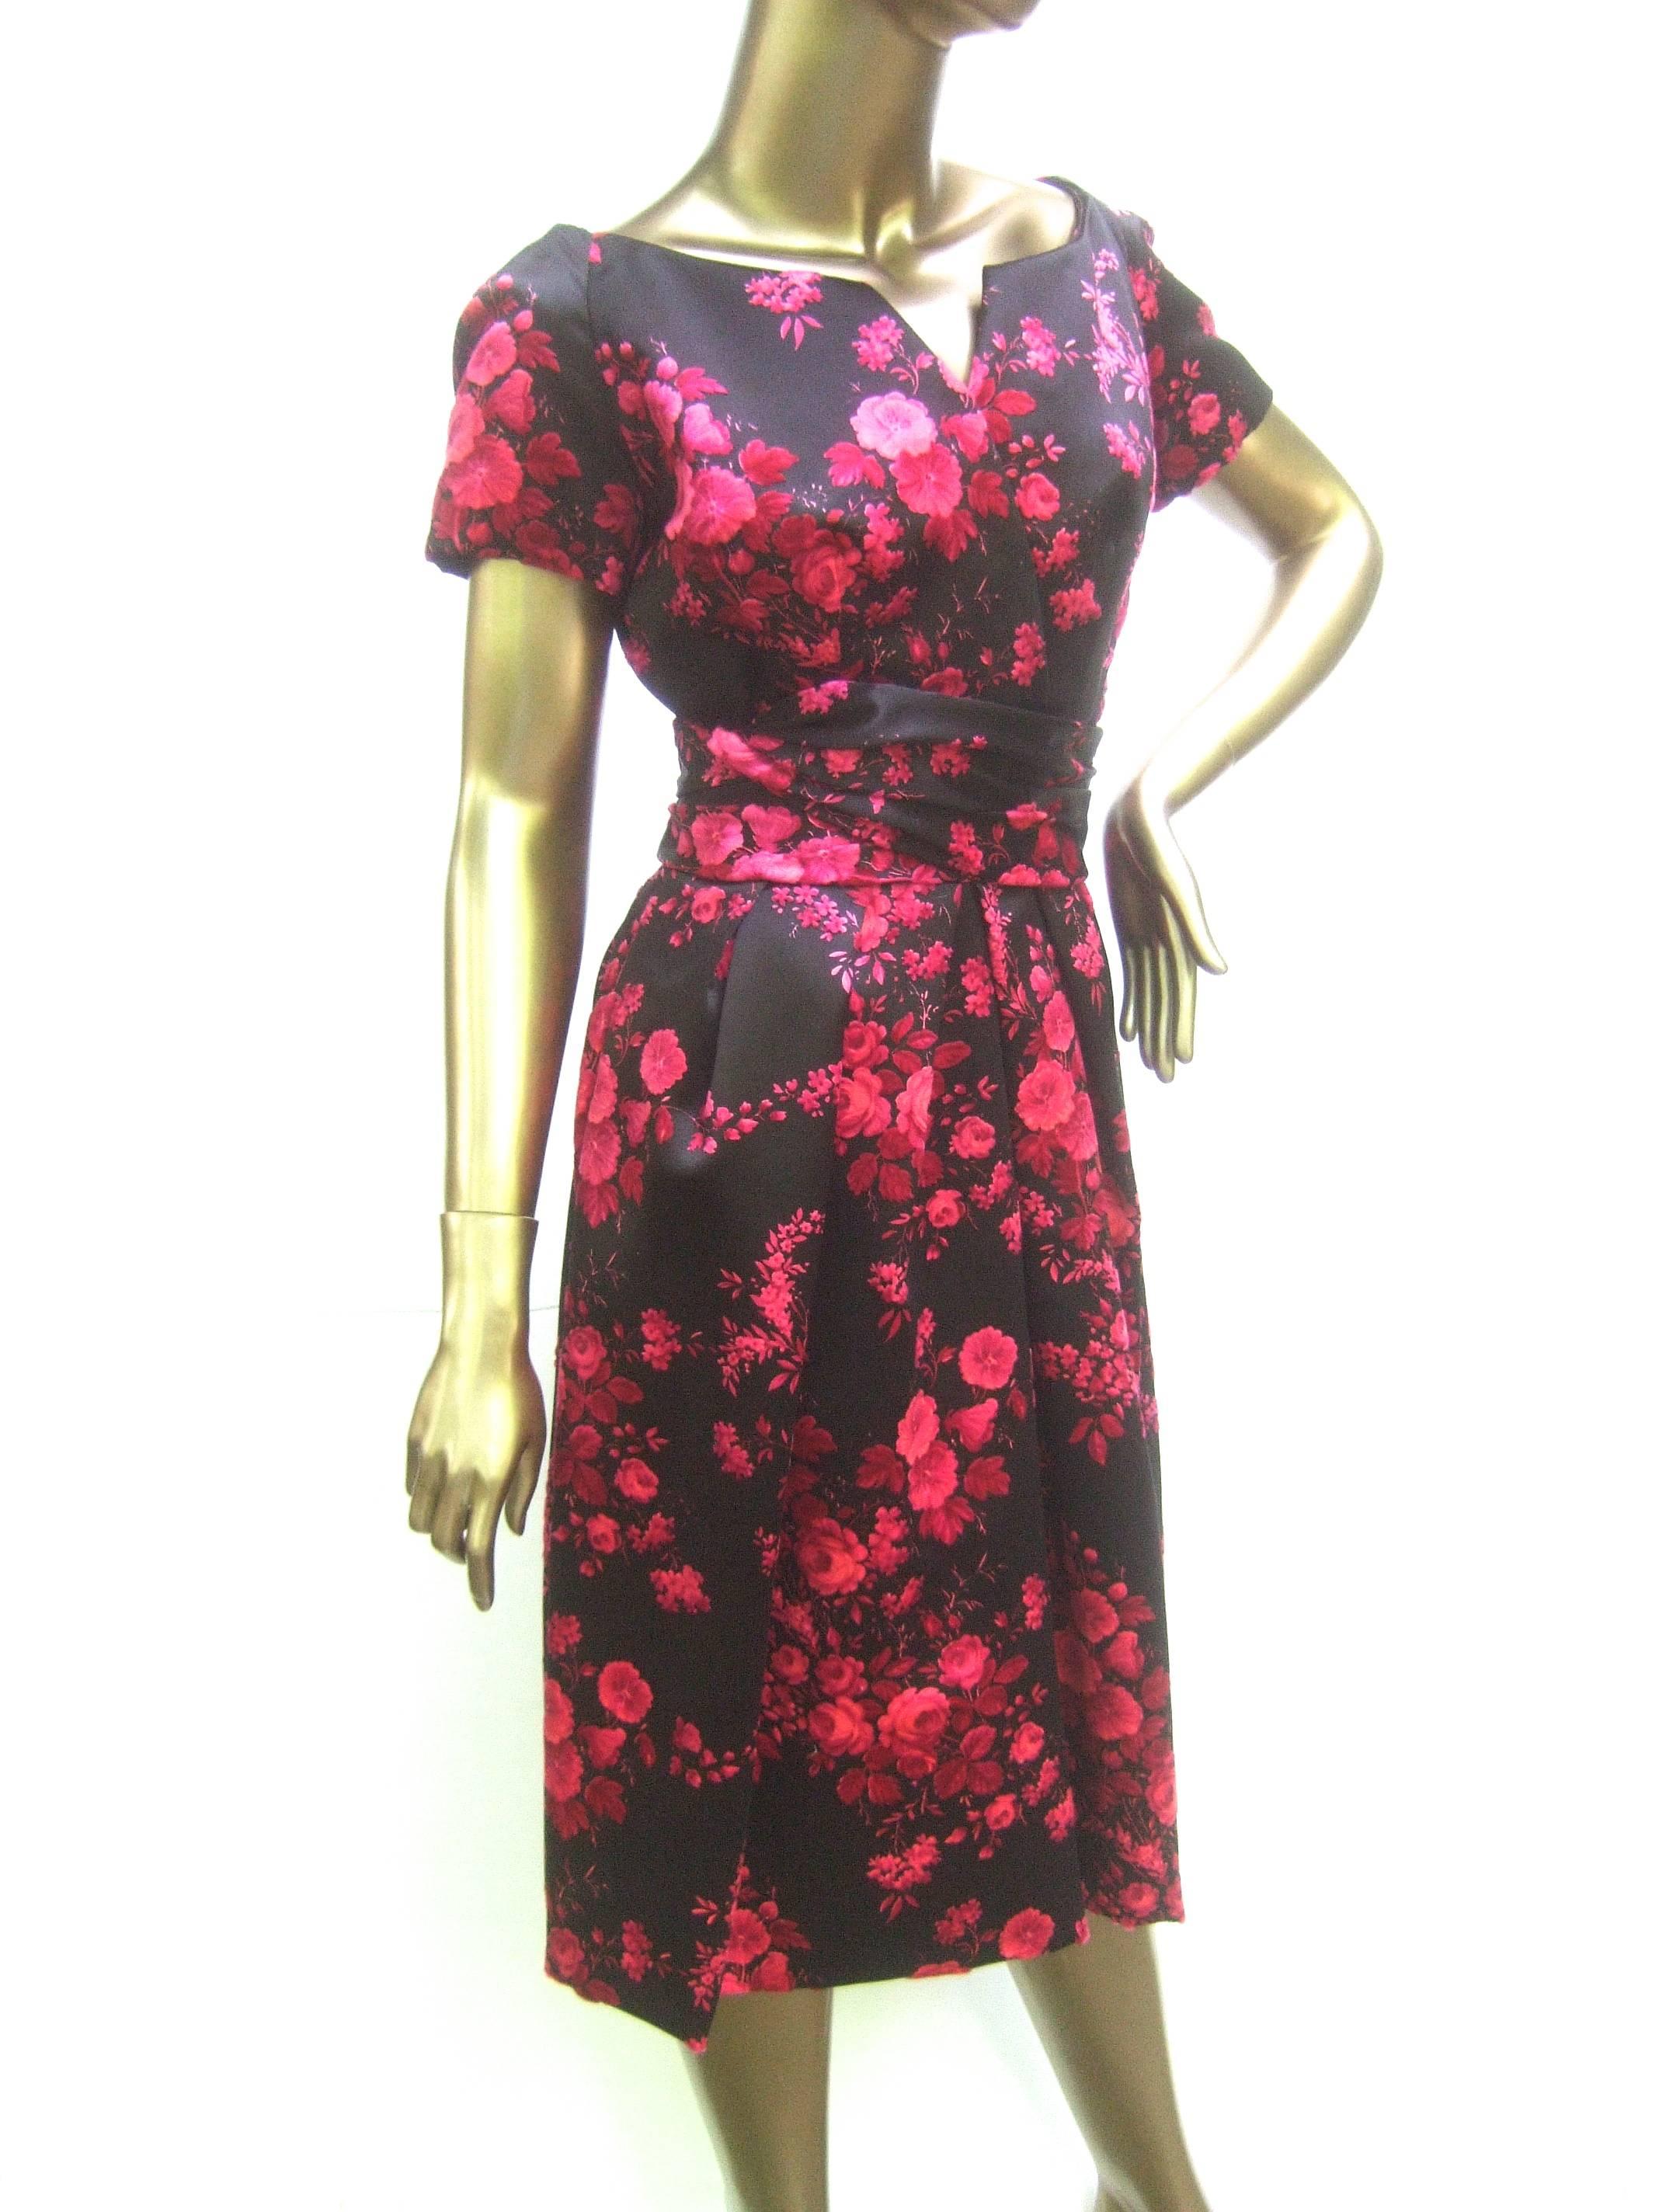 Black Christian Dior Couture Satin Floral Print Dress circa 1960